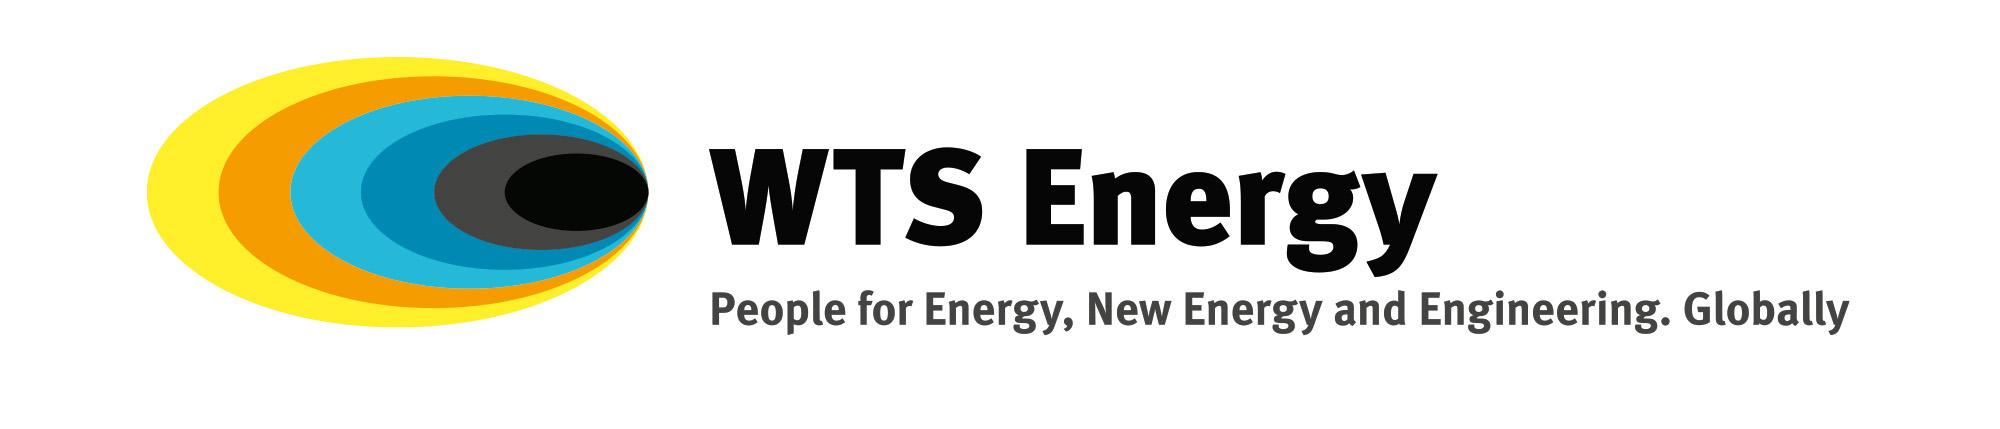 WTS Energy - logo